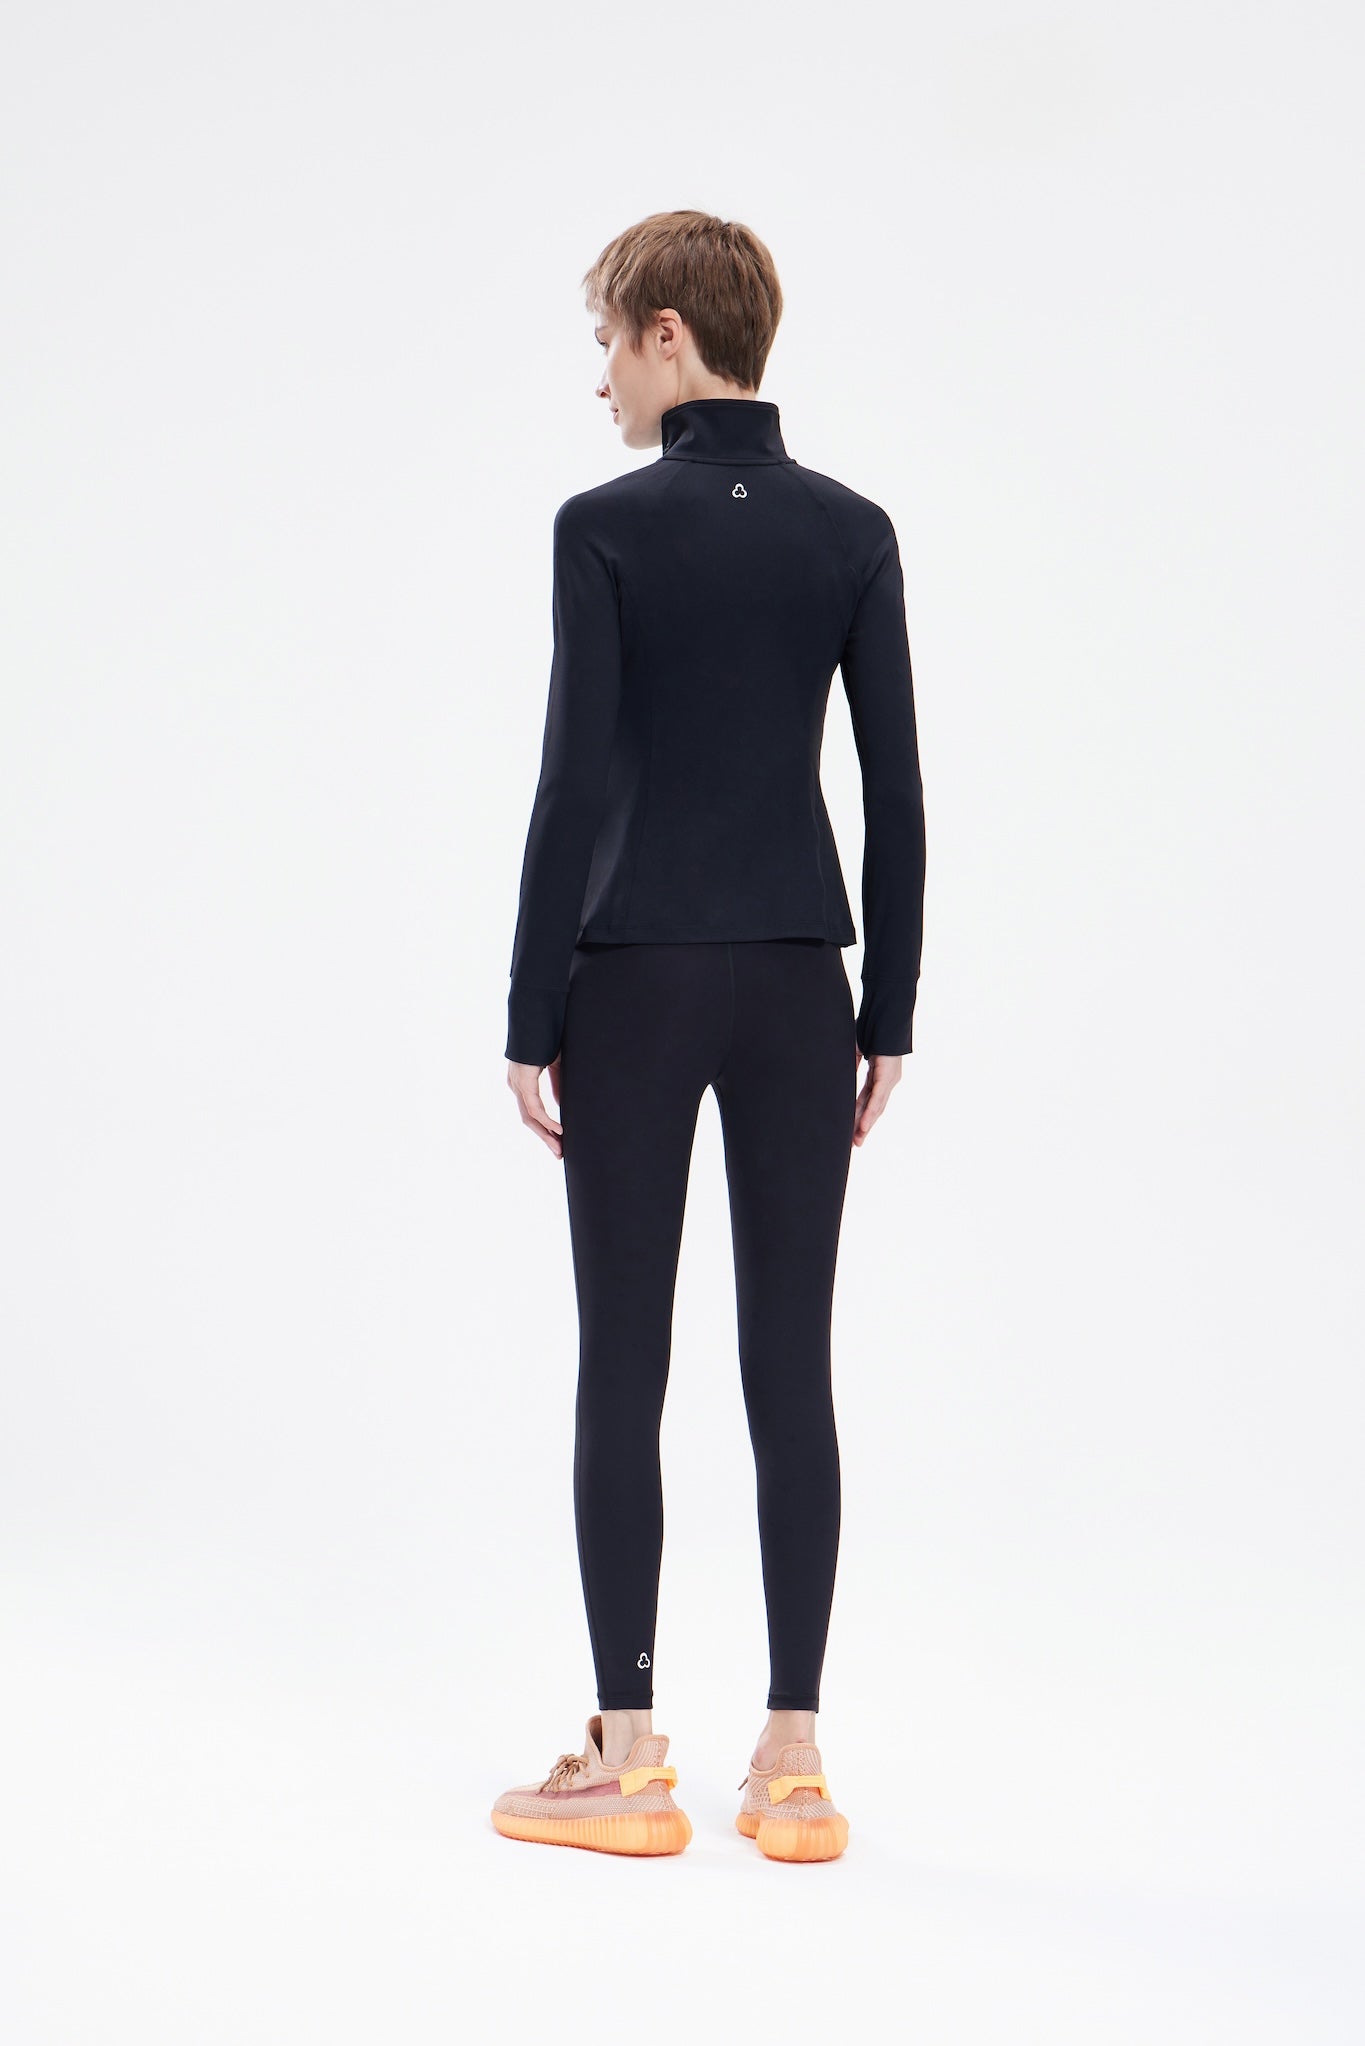 S Curve Mesh Leggings – TITIKA Active Couture